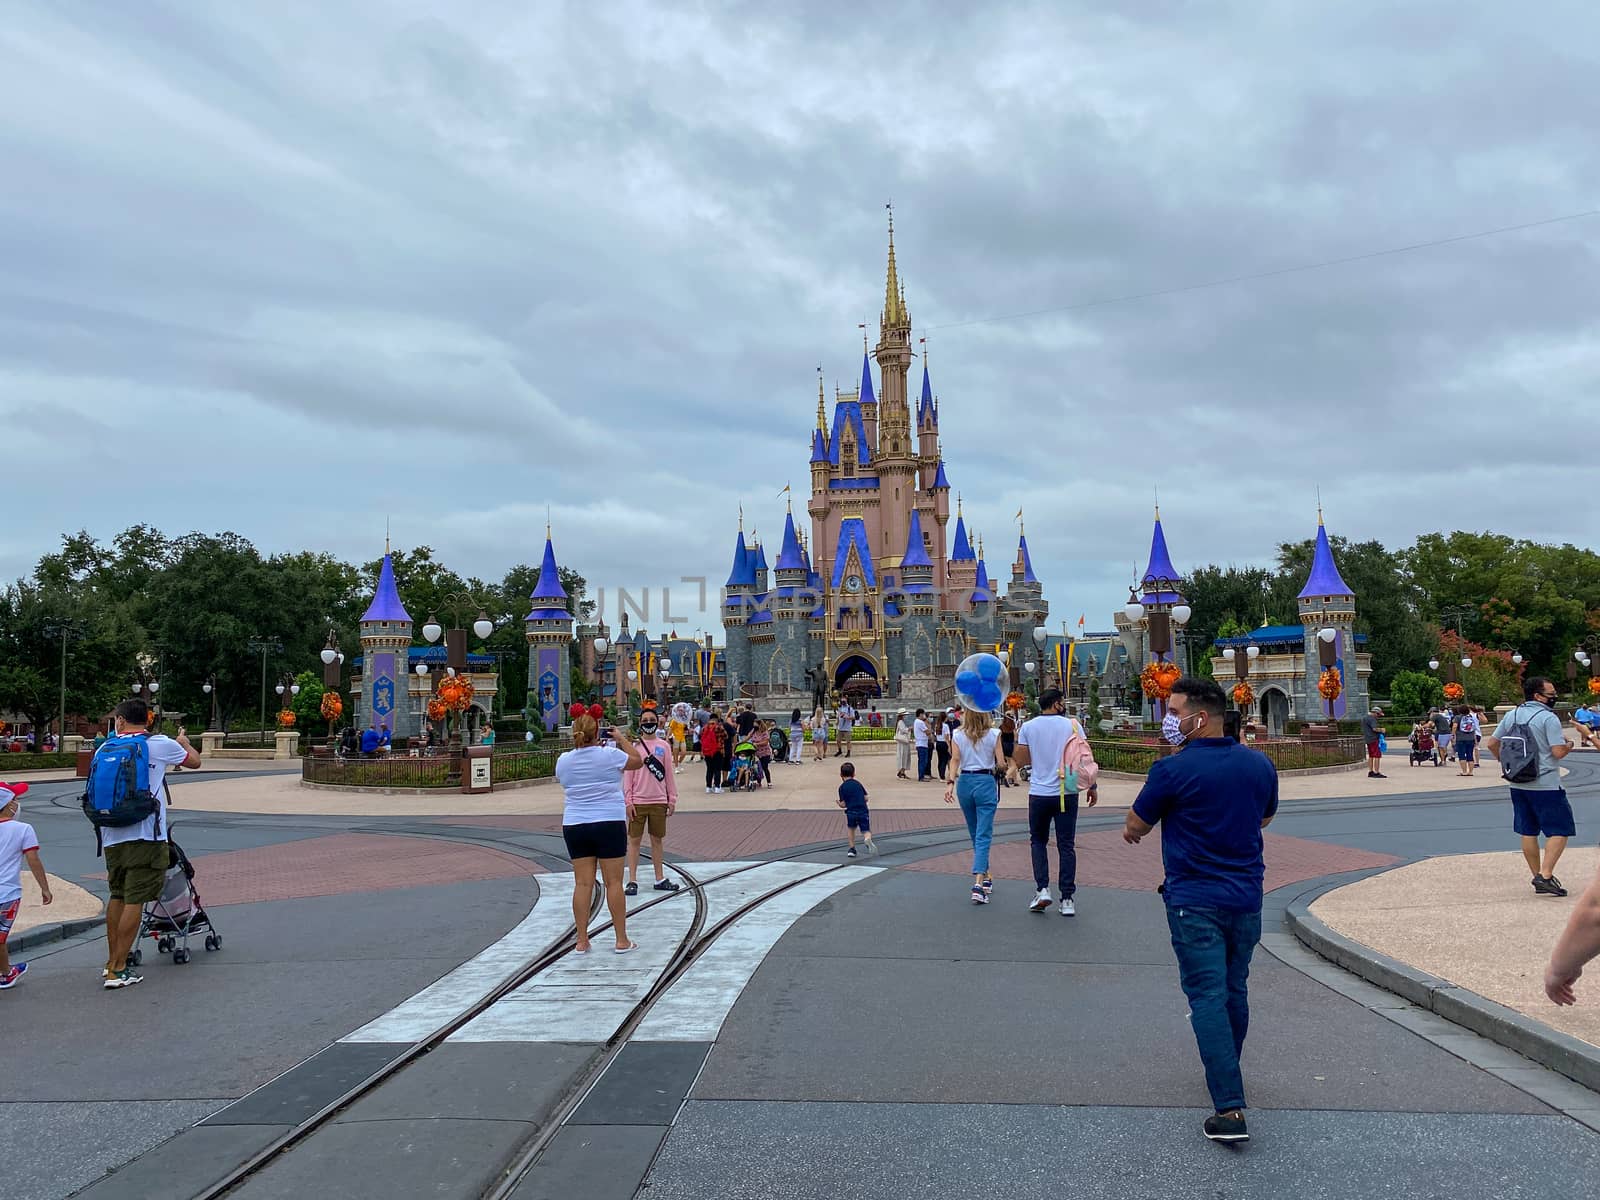 Orlando,FL/USA-10/21/20: People walking up to Cinderella's Castle in the Magic Kingdom at  Walt Disney World Resorts in Orlando, FL.